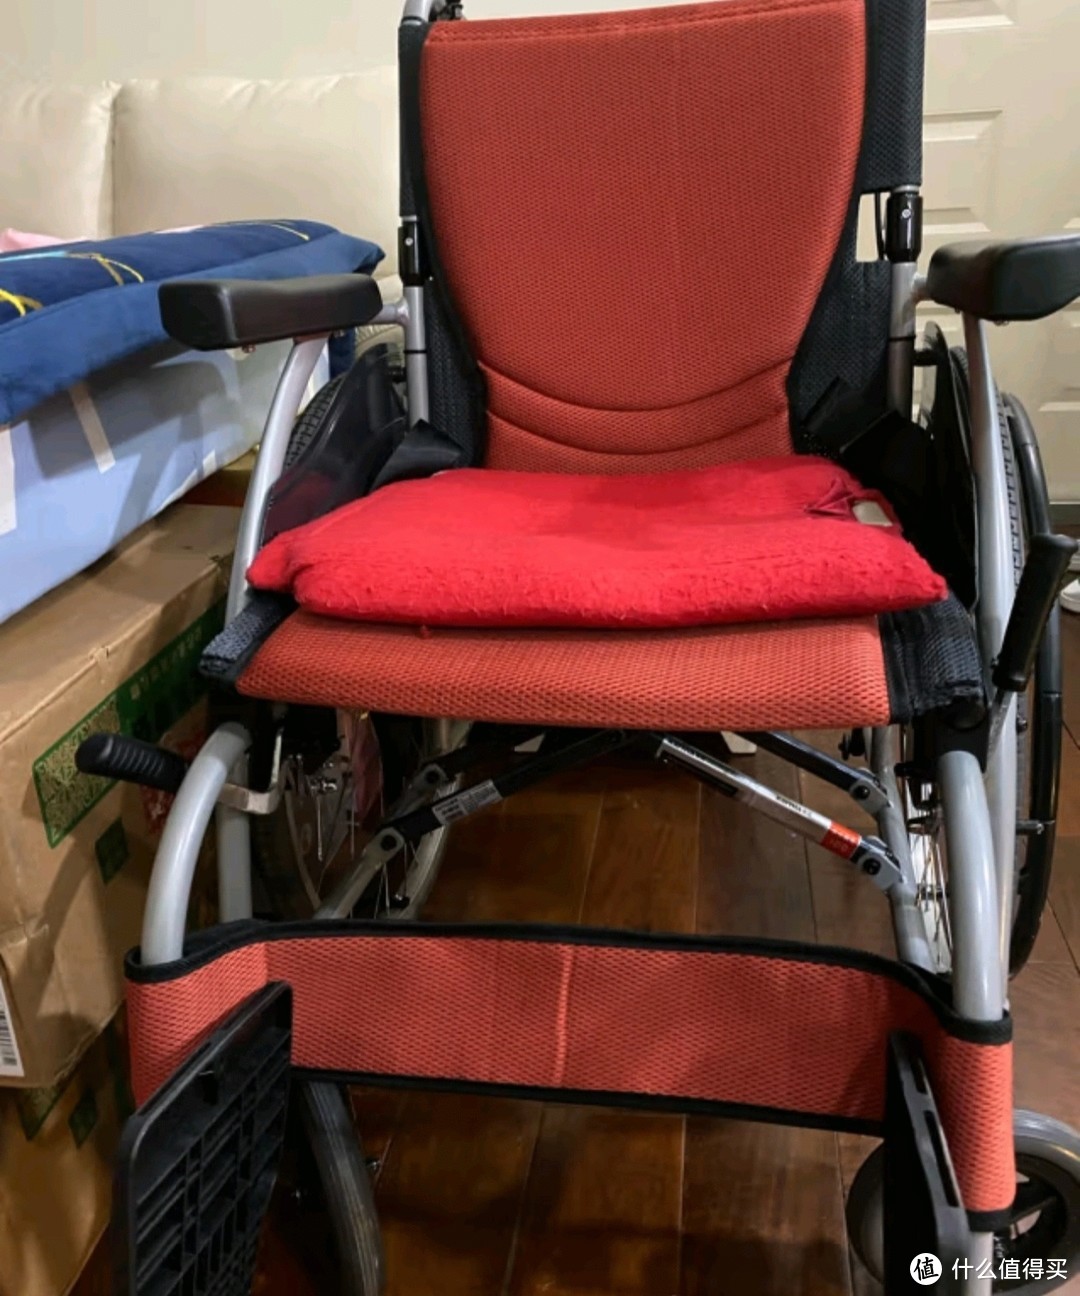 KARMA康扬轮椅老年人可折叠轻便便携残疾铝合金高端居家护理舒适多功能手推手动轮椅车KM-1502